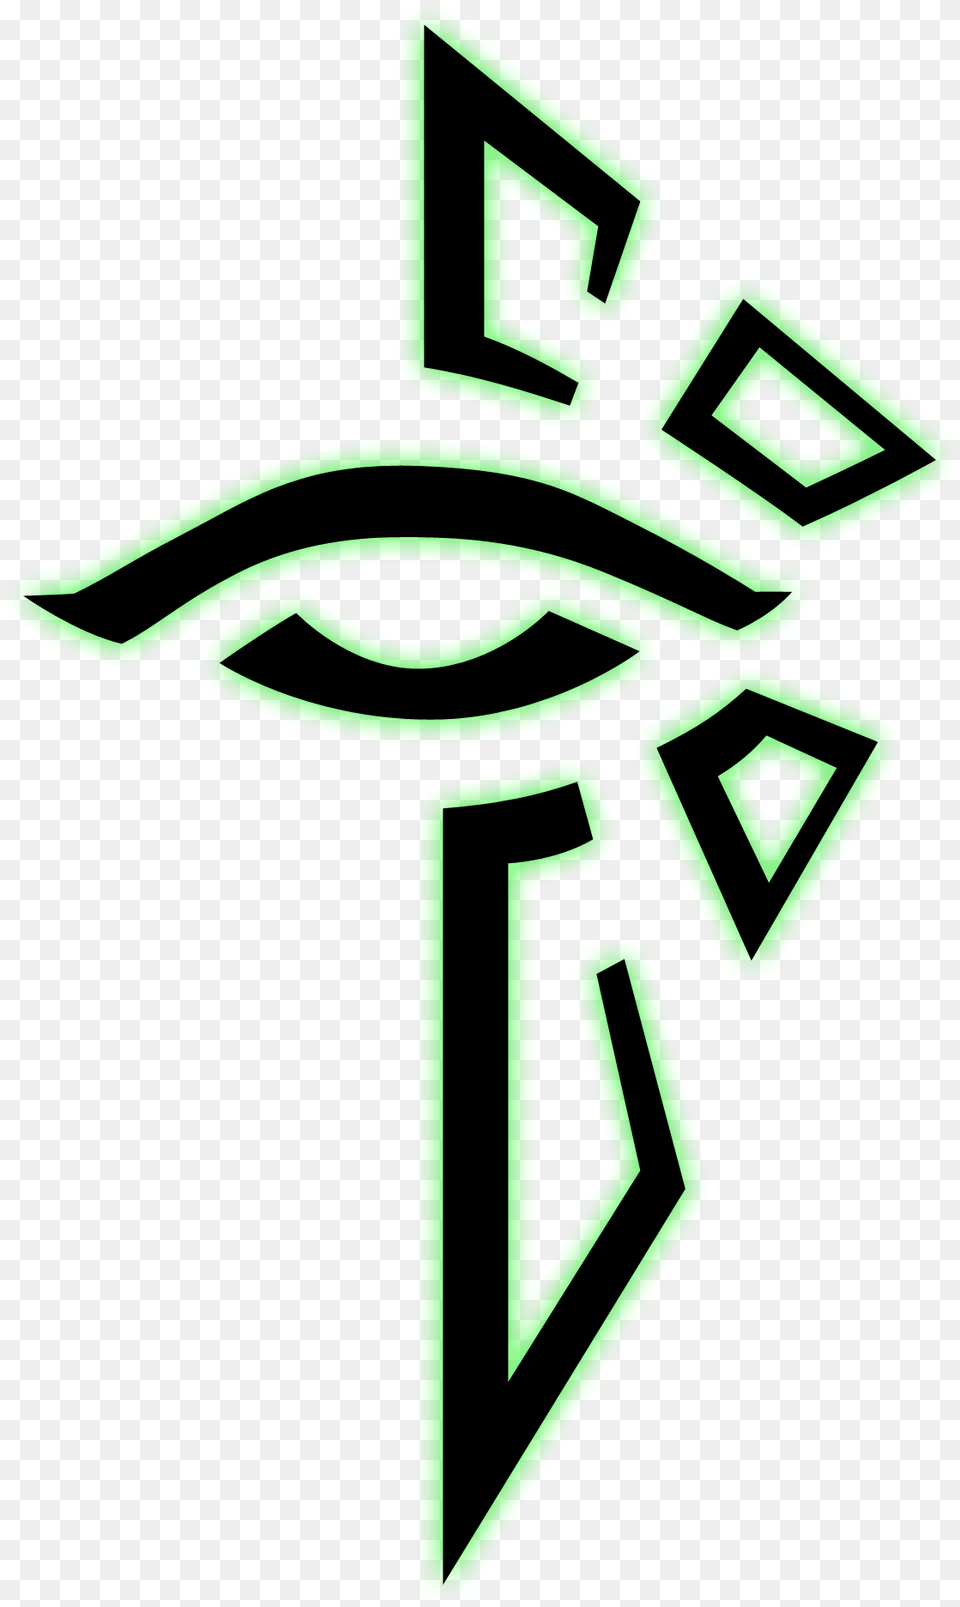 Github Cr0ybotingresslogos Vector Symbols Based On Ingress Enlightened Logo, Light, Neon, Cross, Symbol Png Image